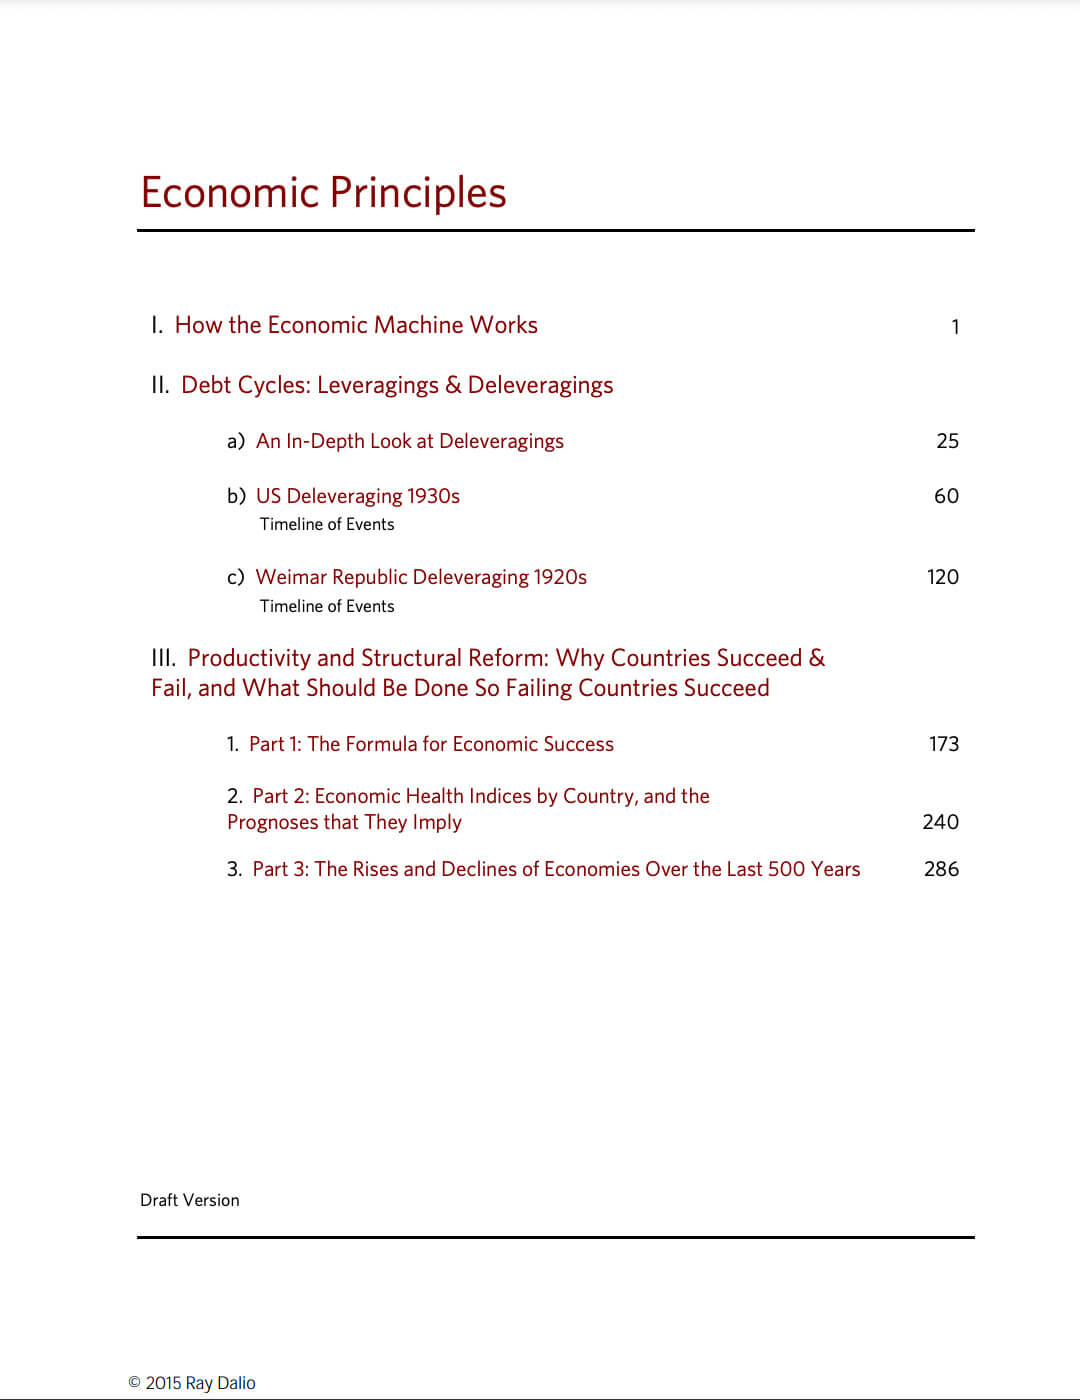 Ray Dalio Books #1: Economic Principles